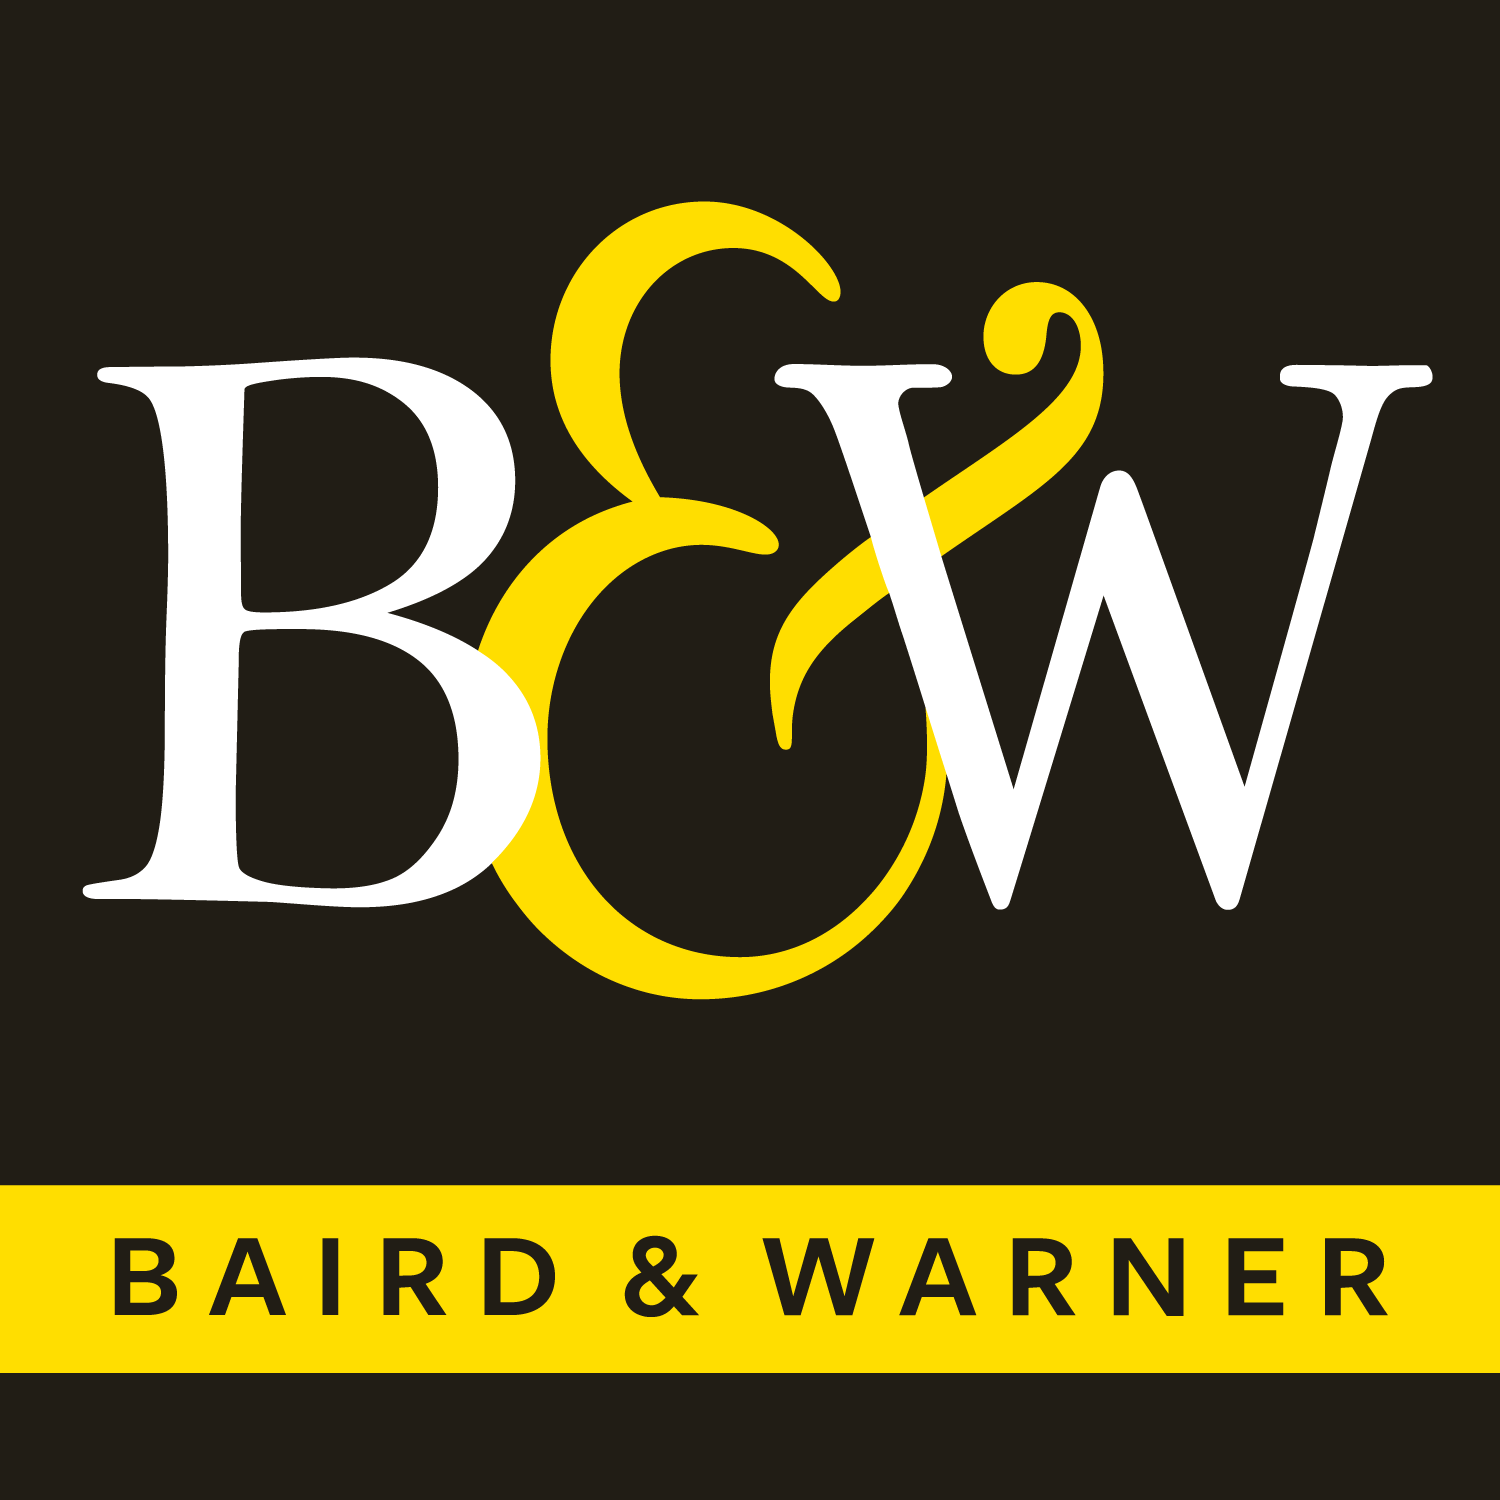 Baird and Warner BW logo